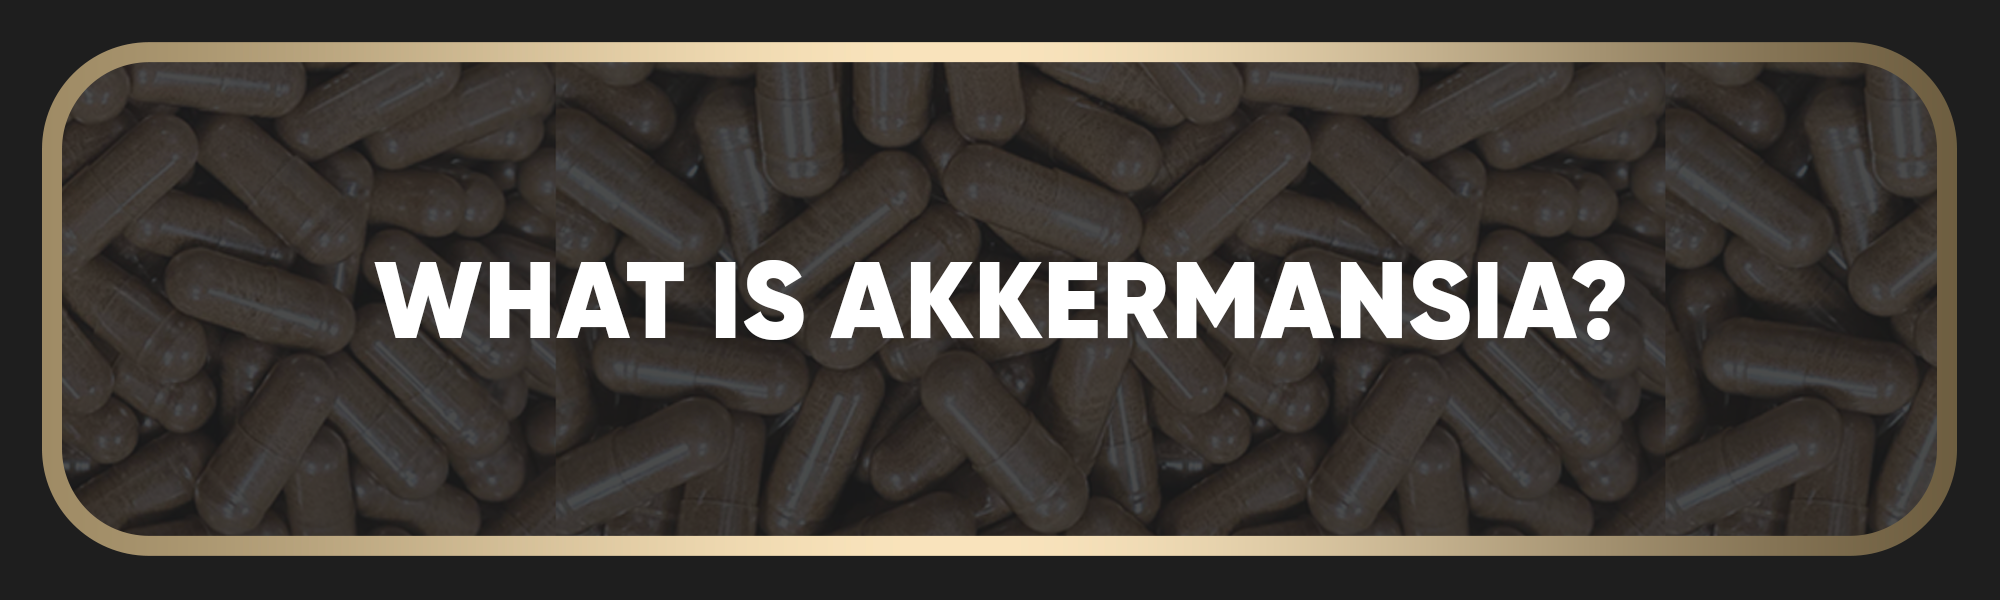 What Is Akkermansia